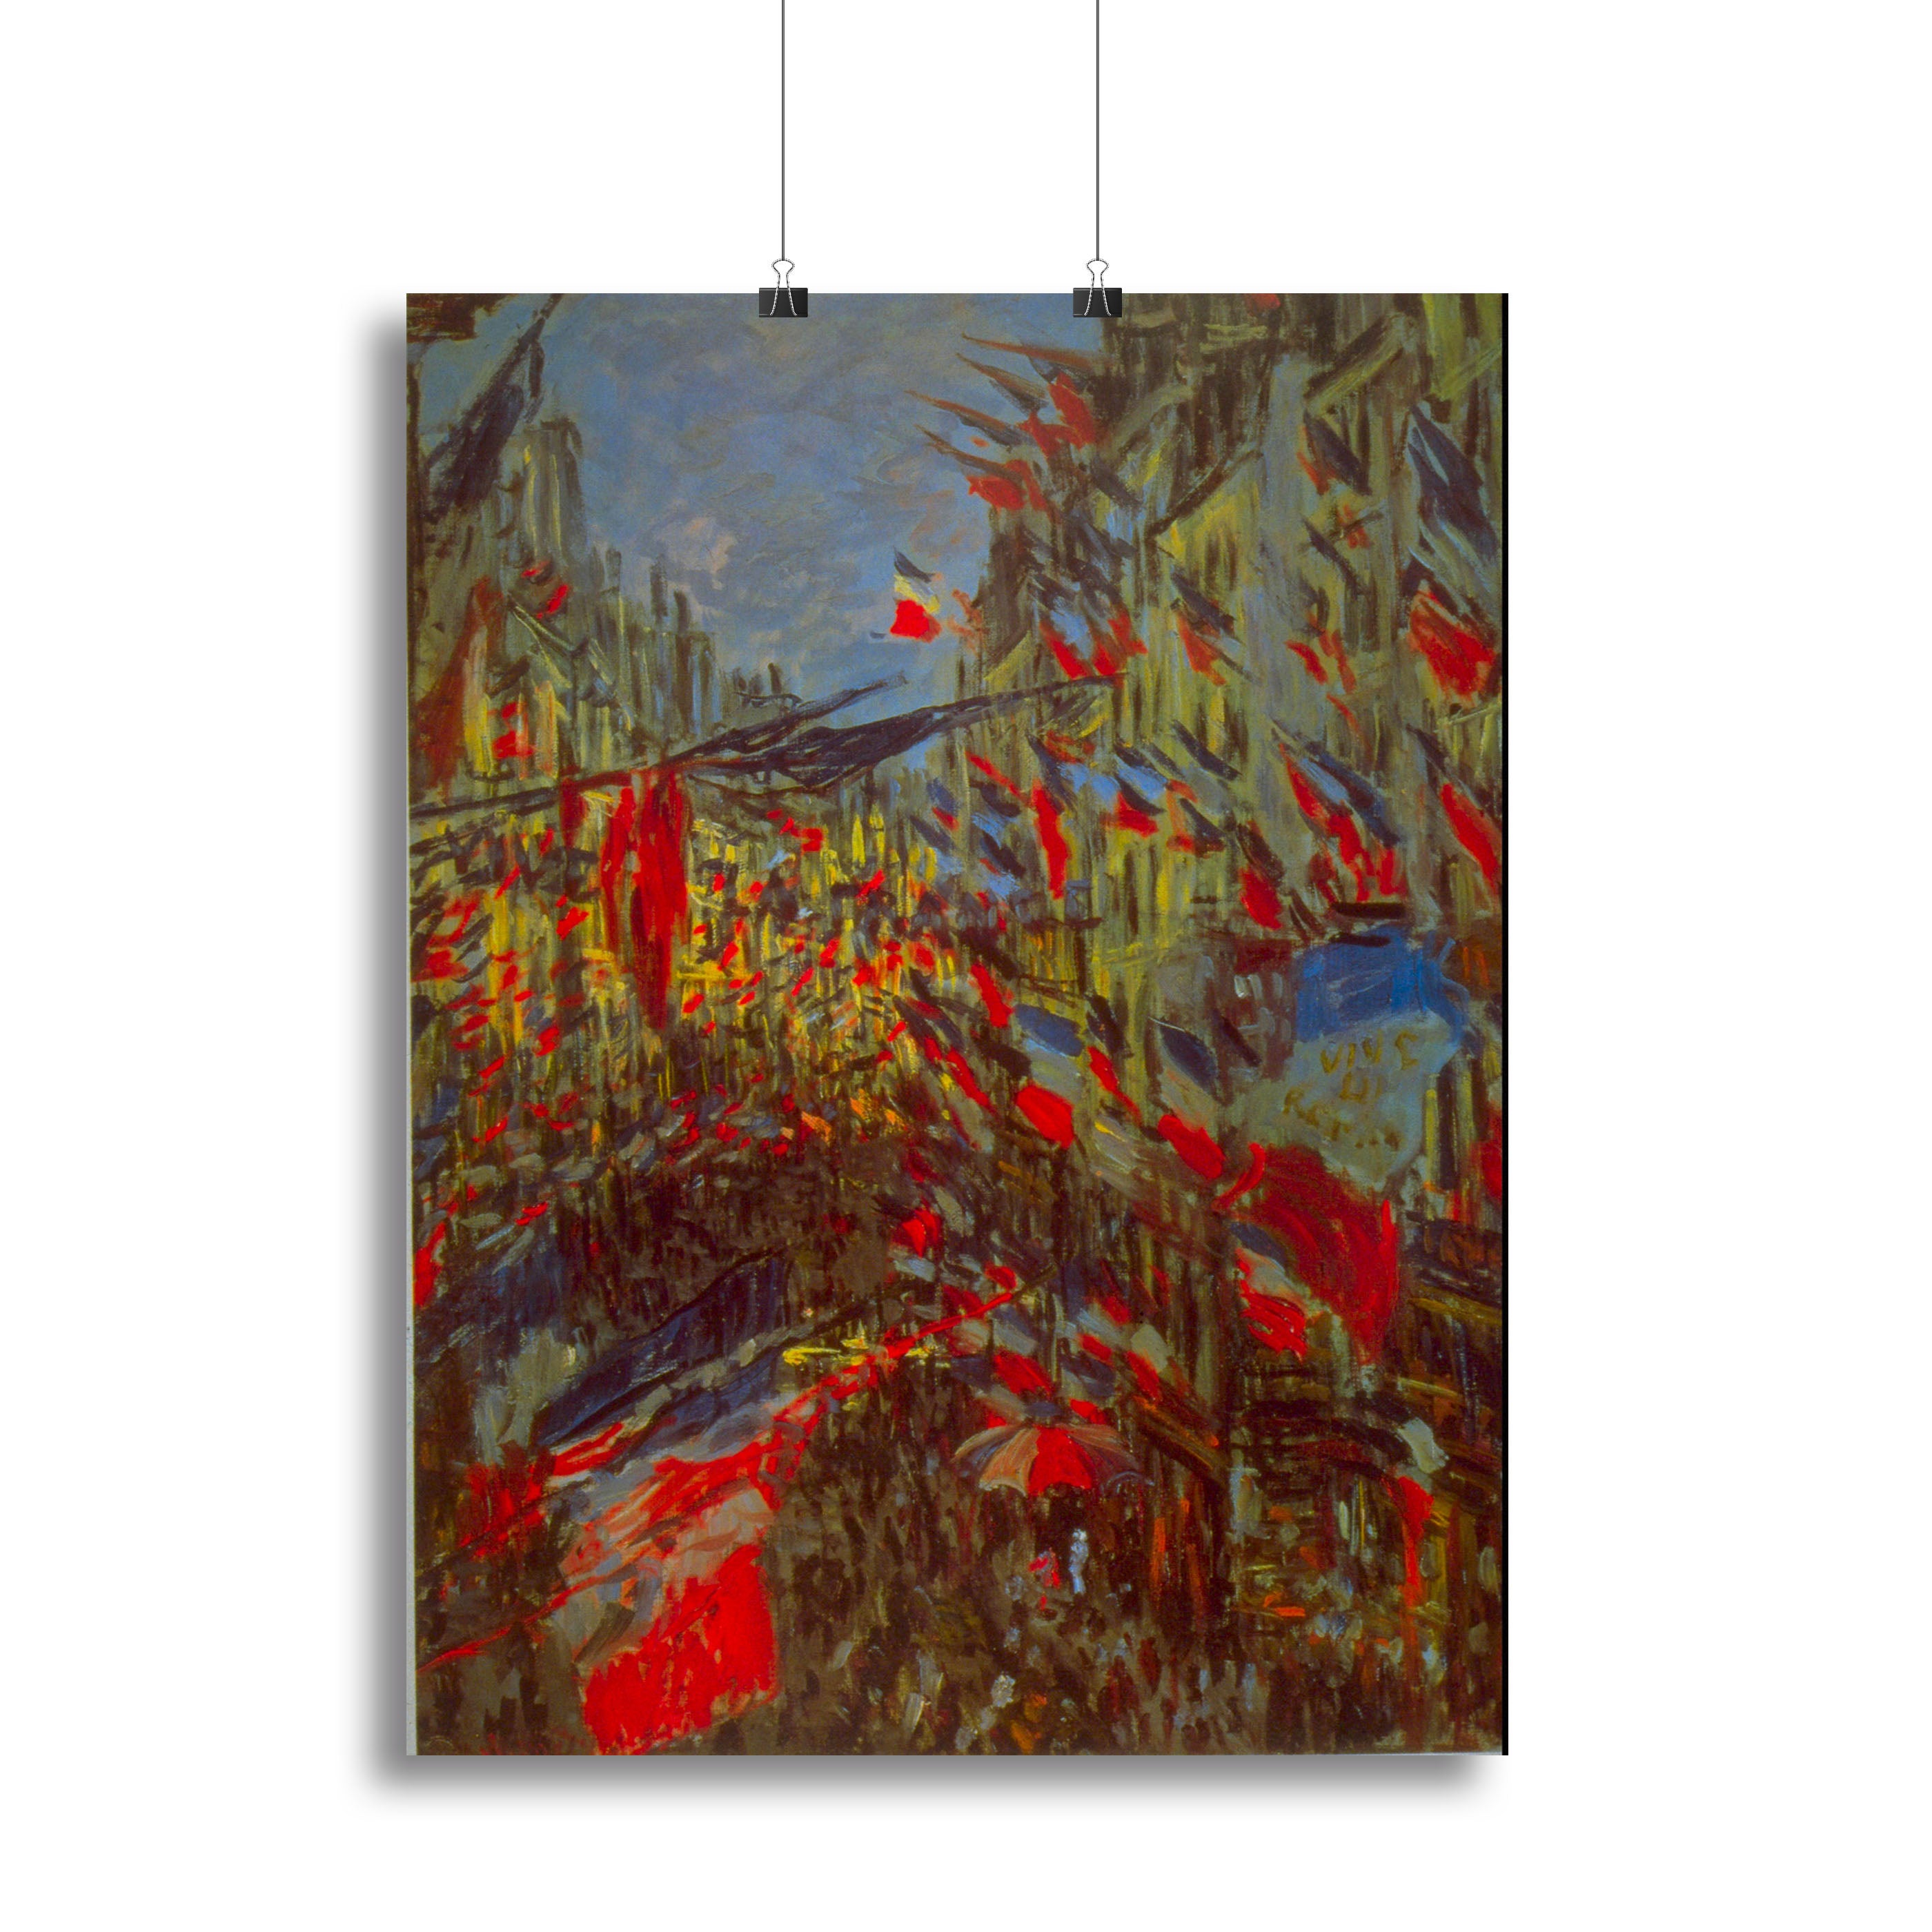 Festivities by Monet Canvas Print or Poster - Canvas Art Rocks - 2